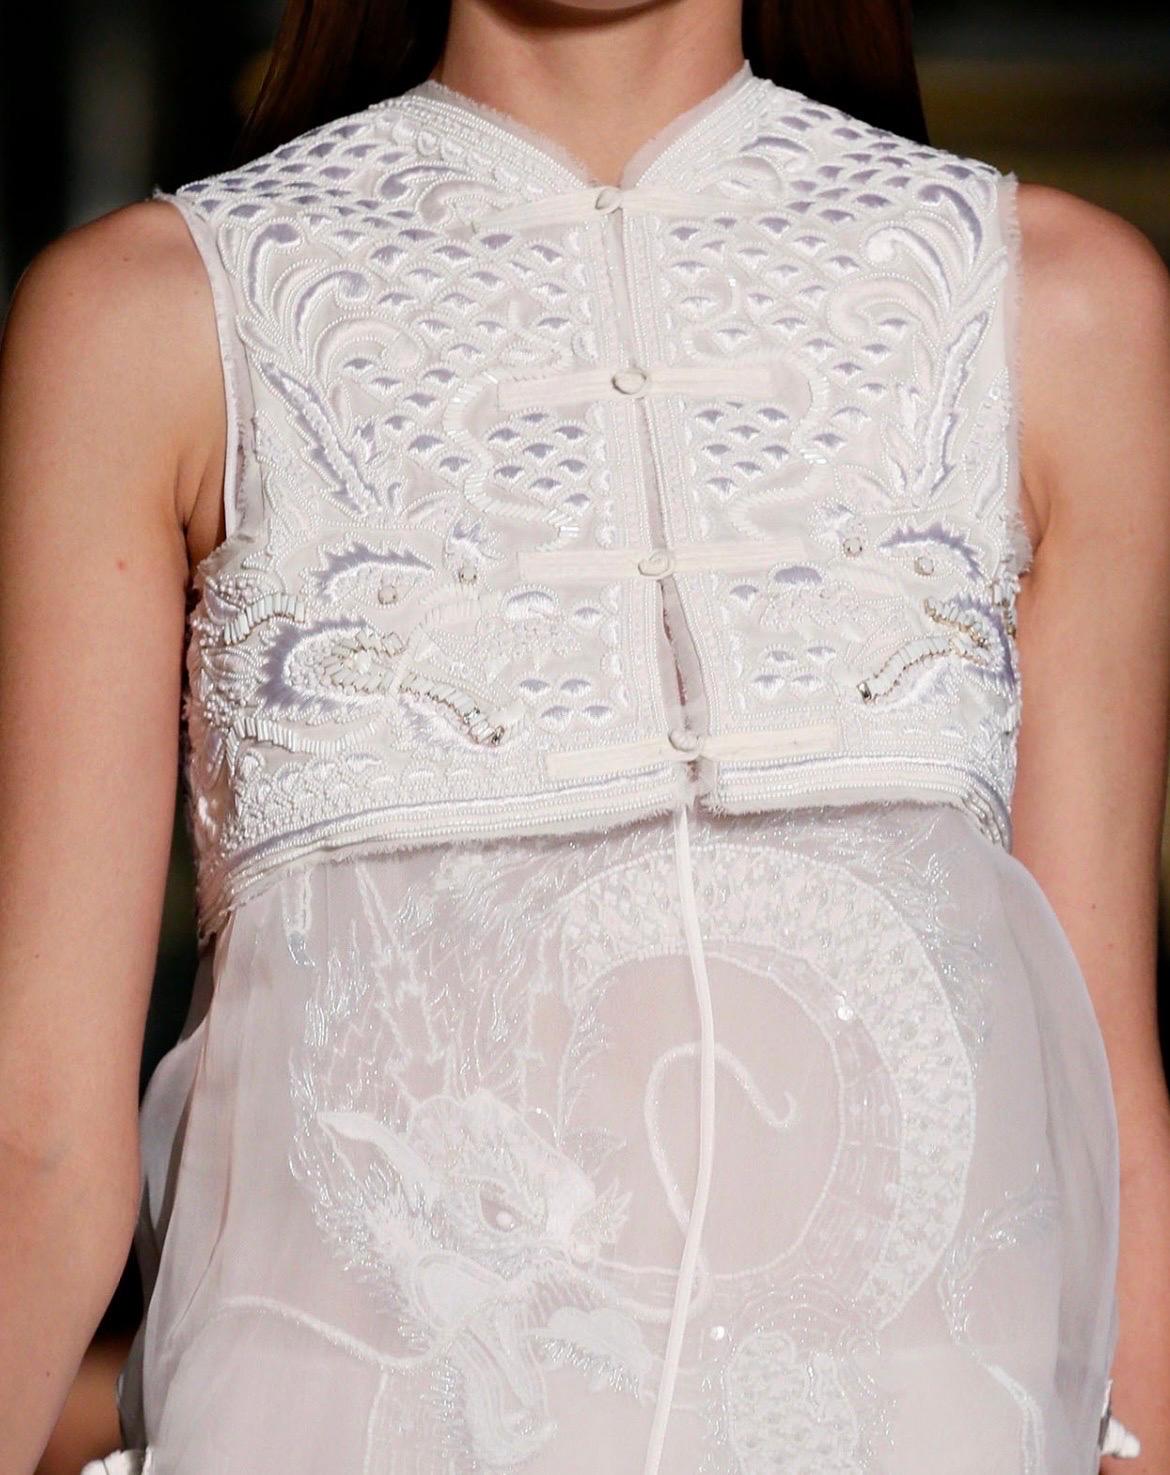 UNWORN Emilio Pucci Peter Dundas Dragon Embroidery Overlay Silk Dress Bridal 40 For Sale 12